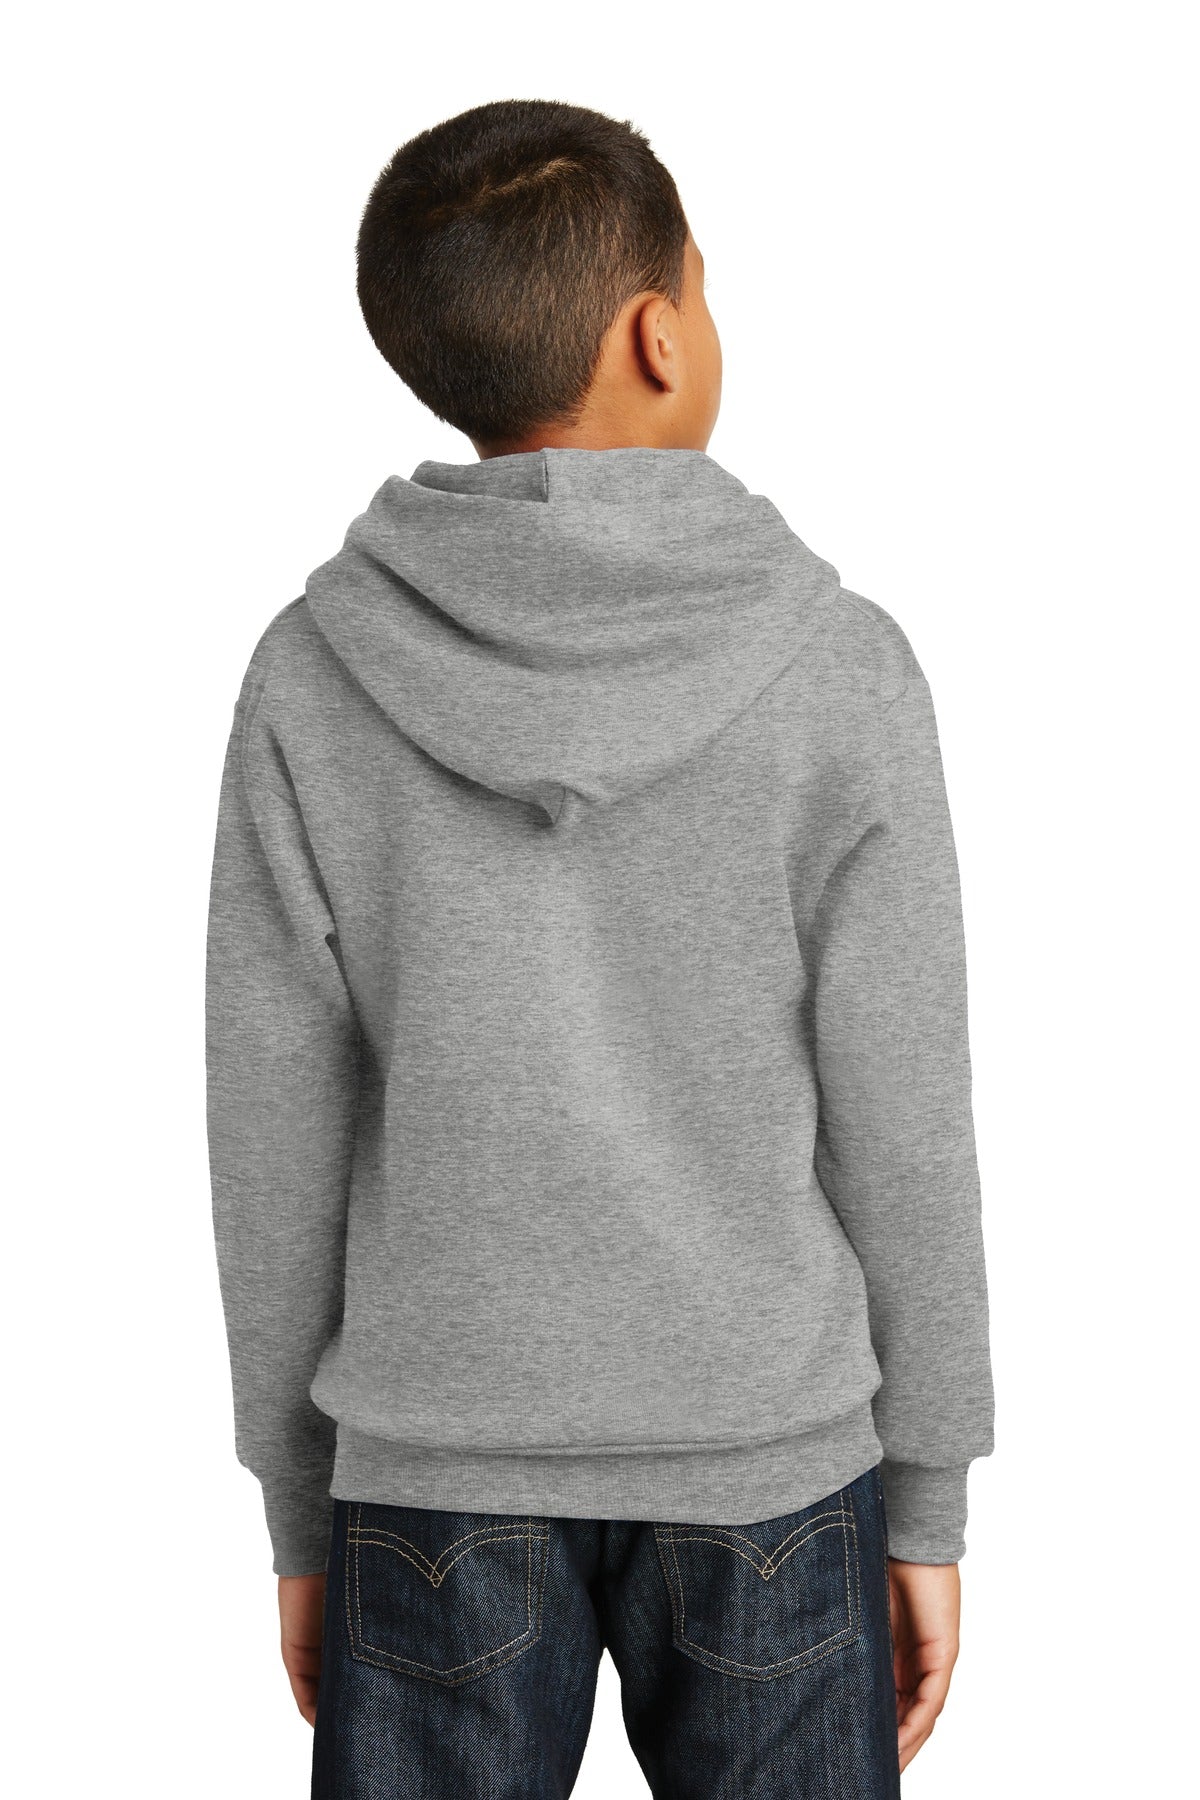 Hanes - Youth EcoSmart Pullover Hooded Sweatshirt. P470